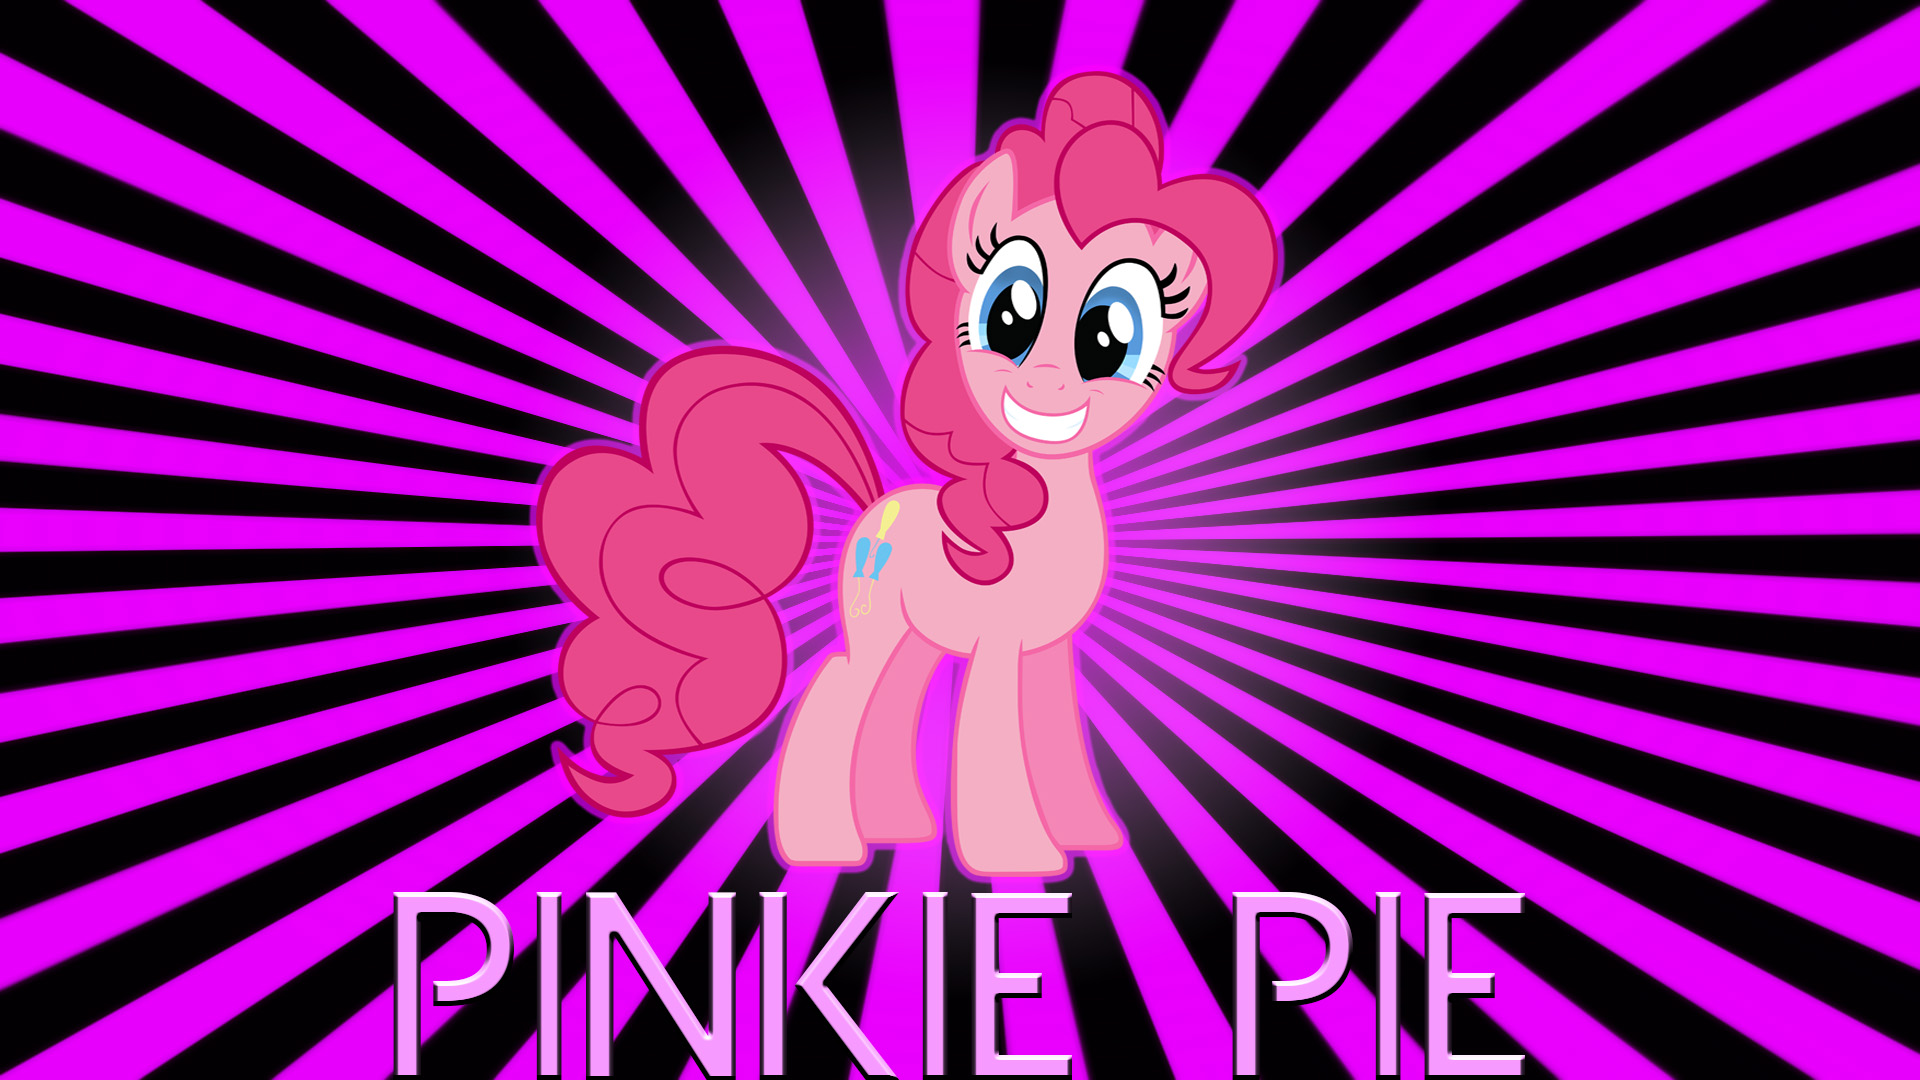 Pinkie Pie starburst by BronyYAY123 and KyssS90